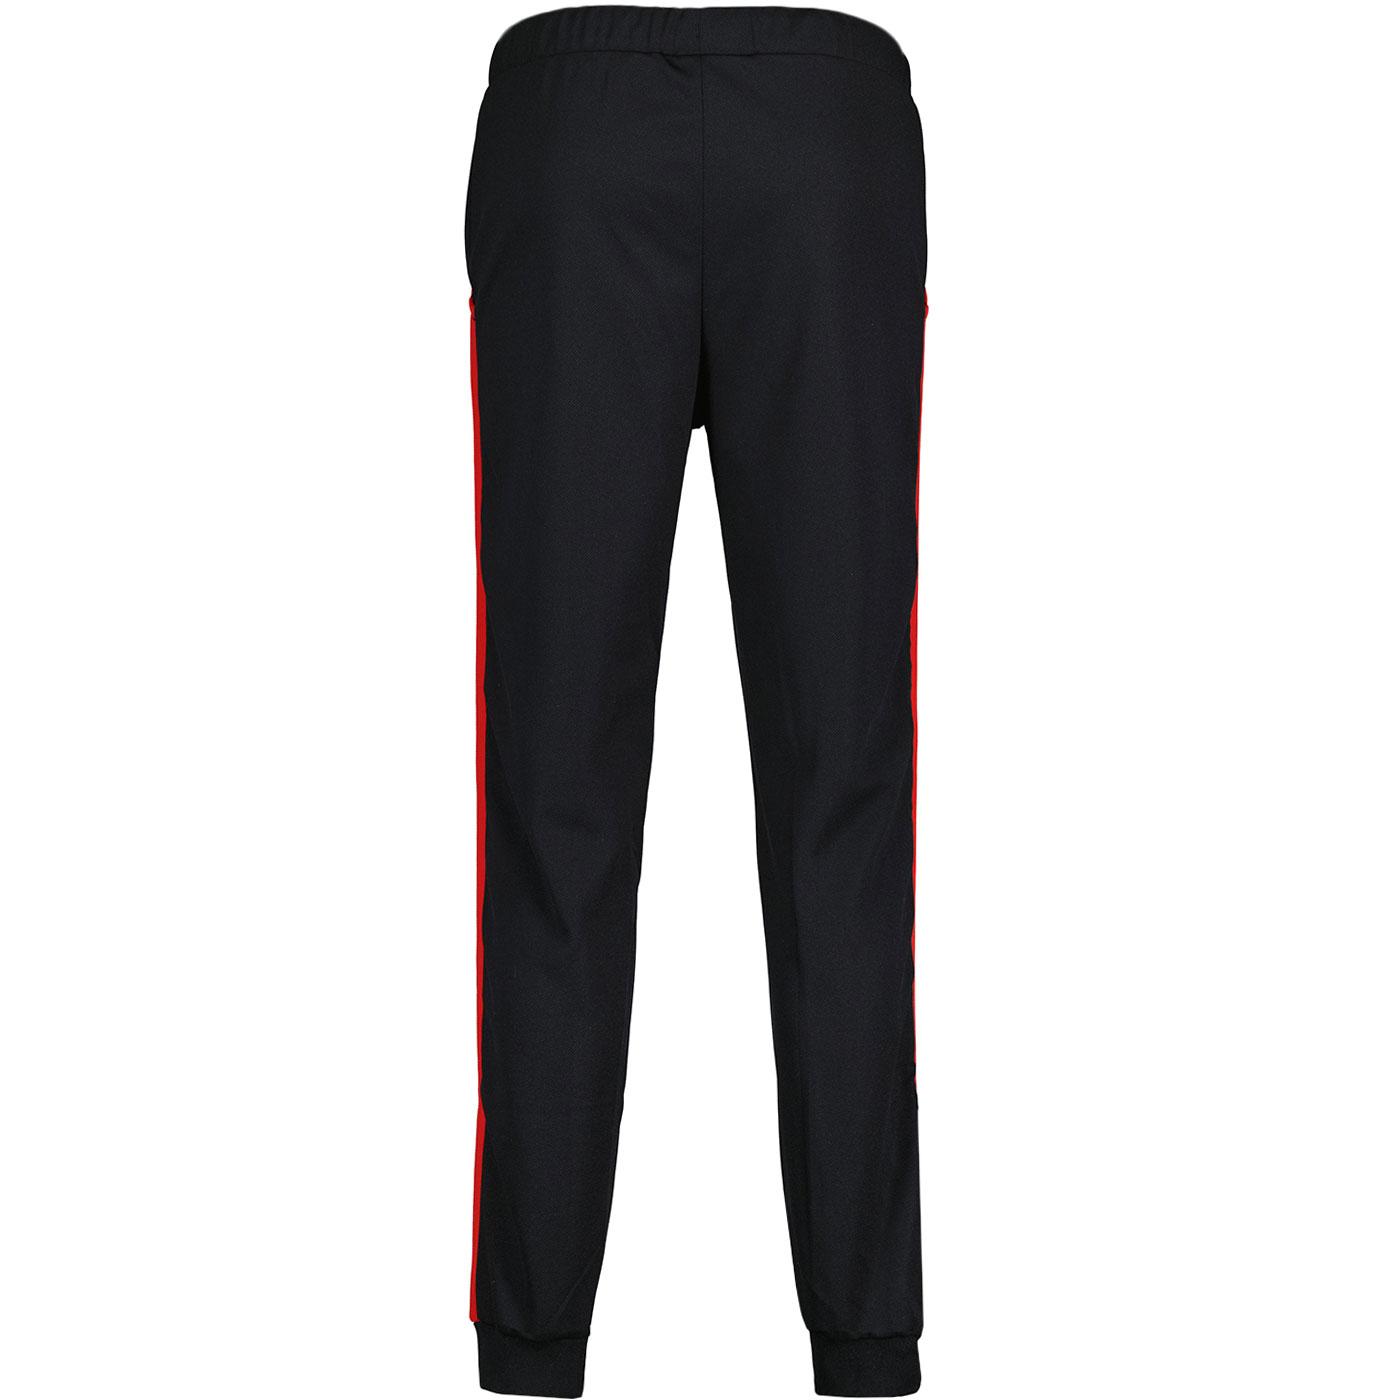 Sergio Tacchini New Damarindo 80s track pants in Black and red